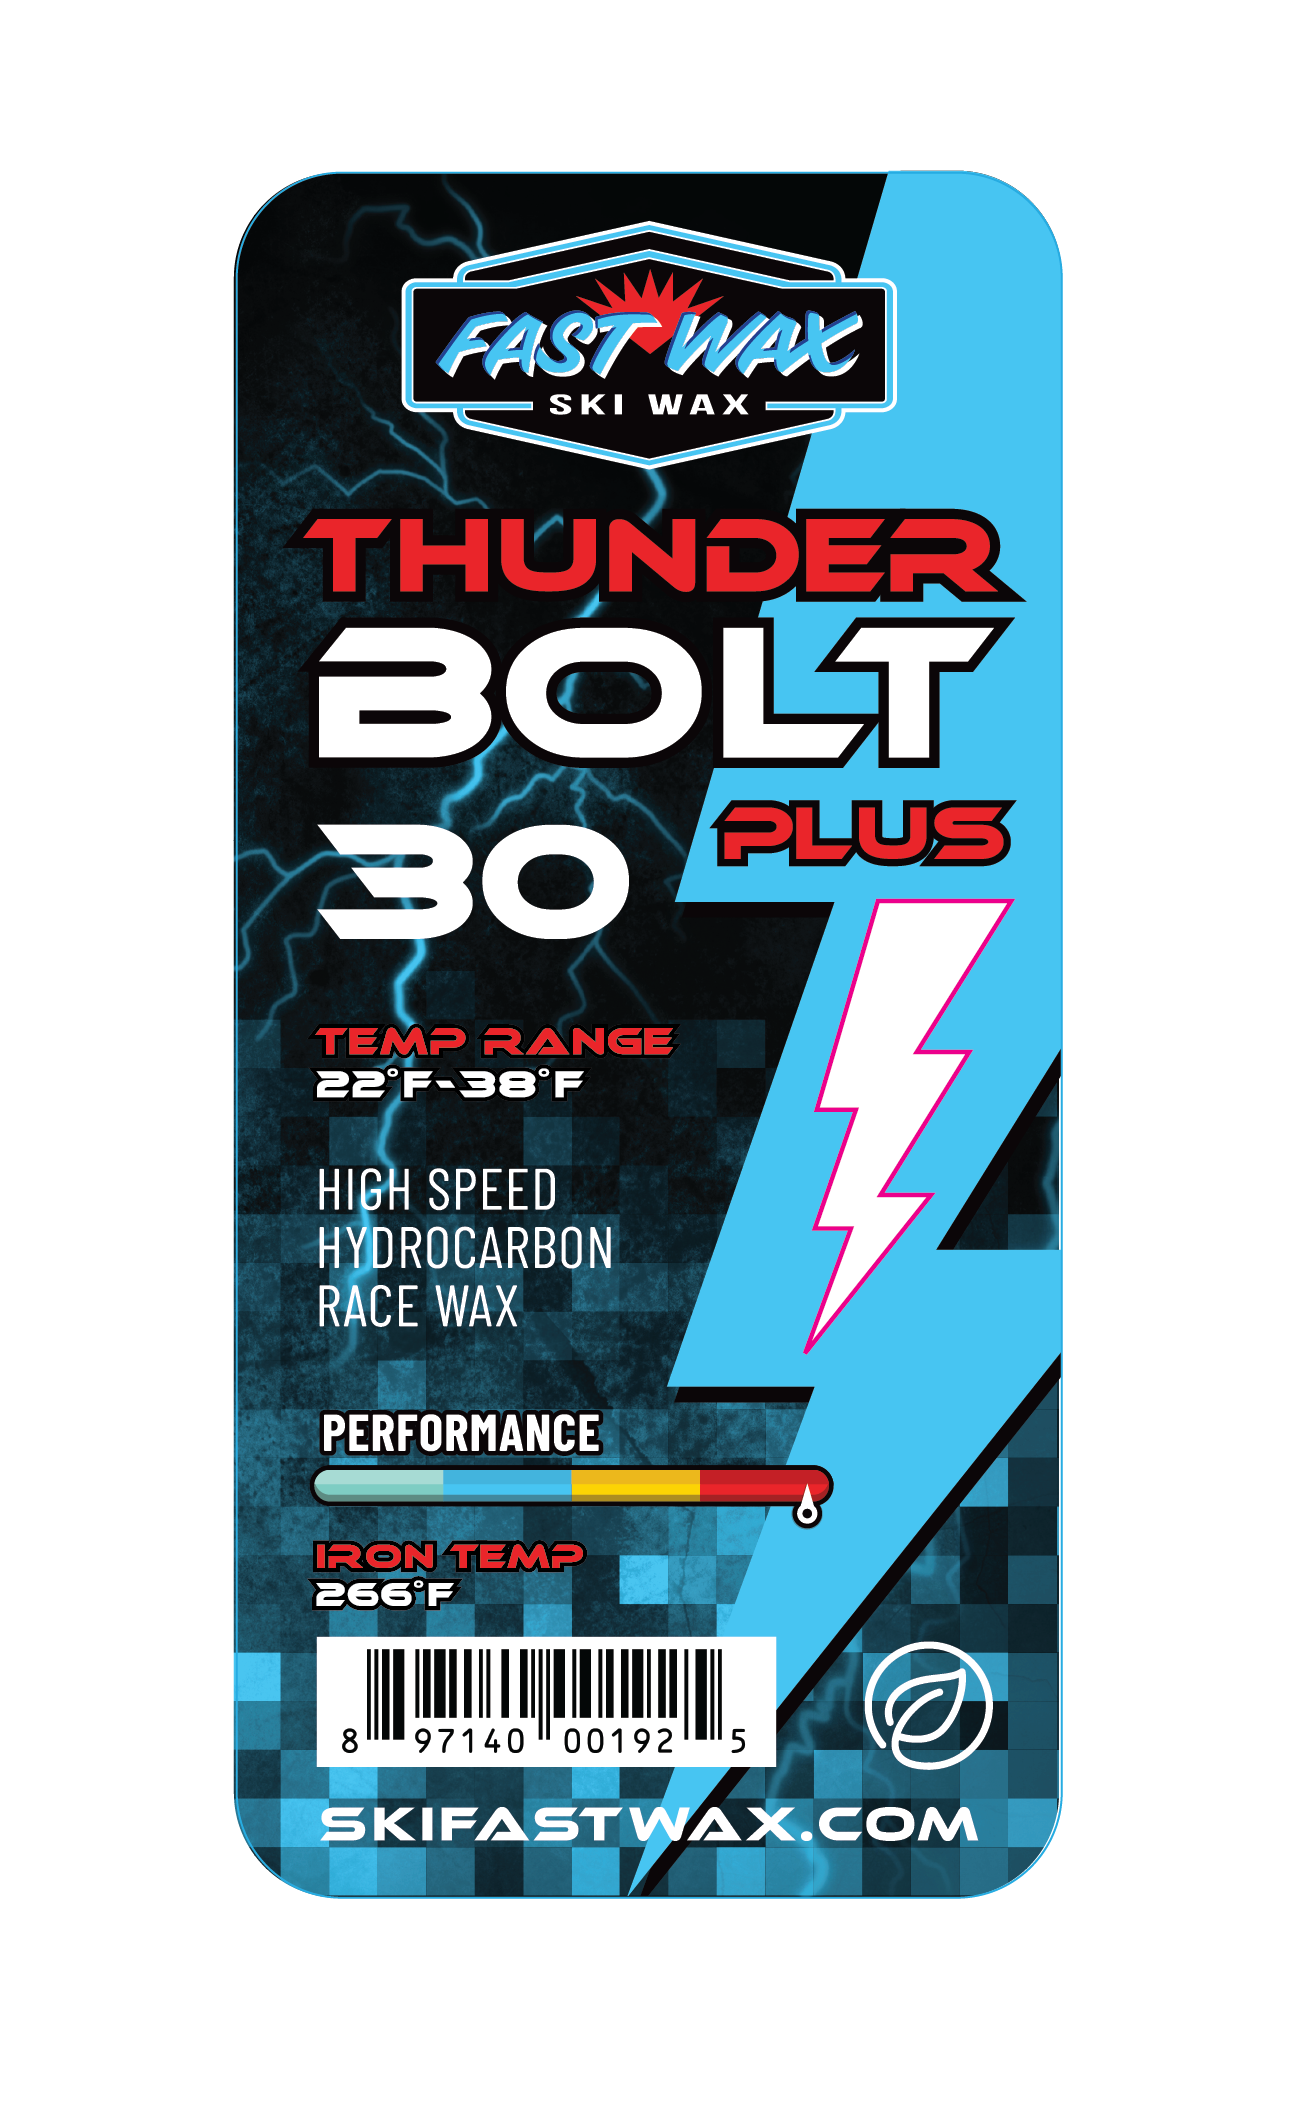 Thunderbolt Plus 30 - Red